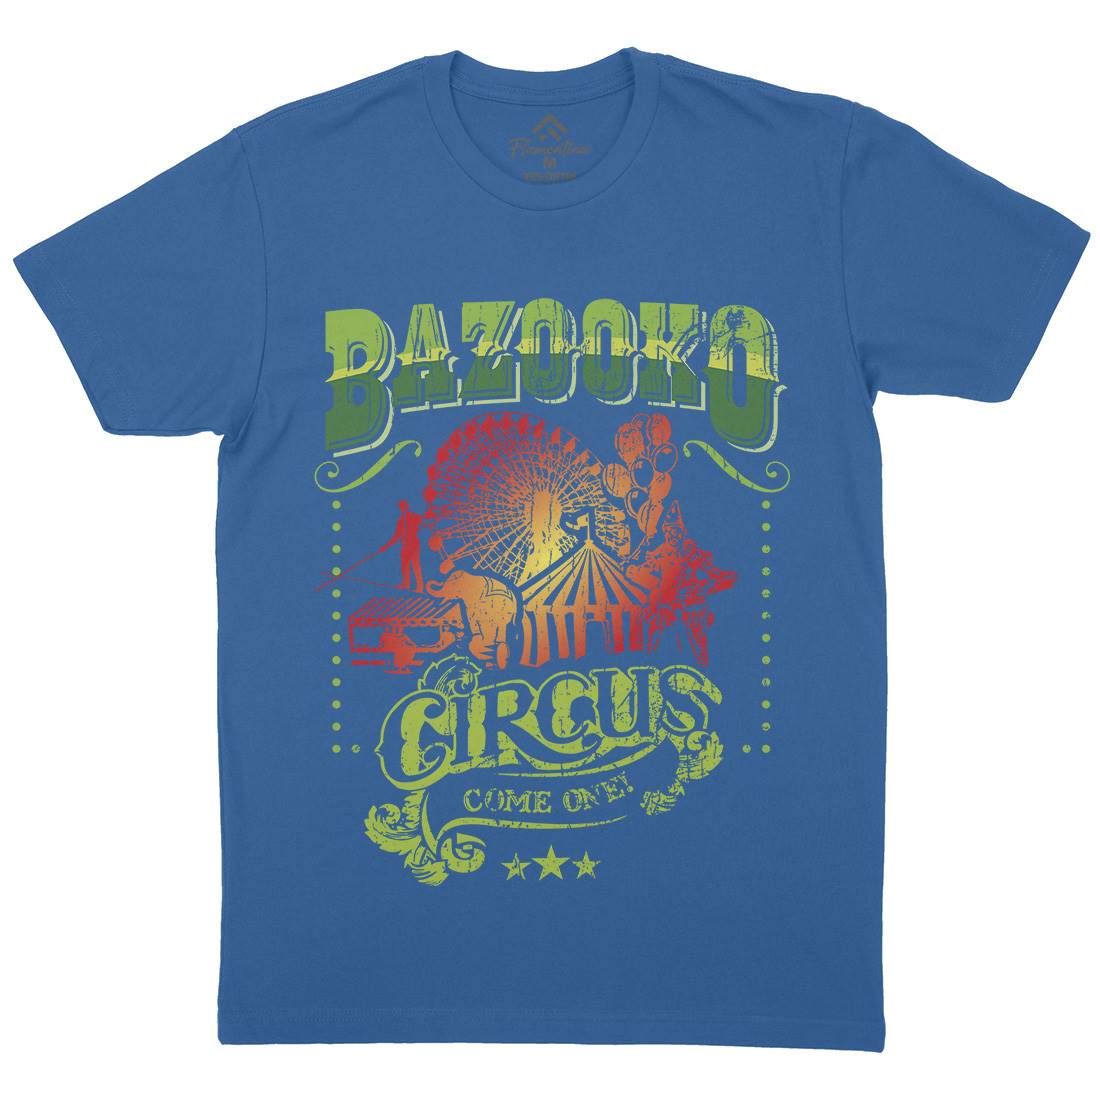 Bazookos Circus Mens Crew Neck T-Shirt Retro D254